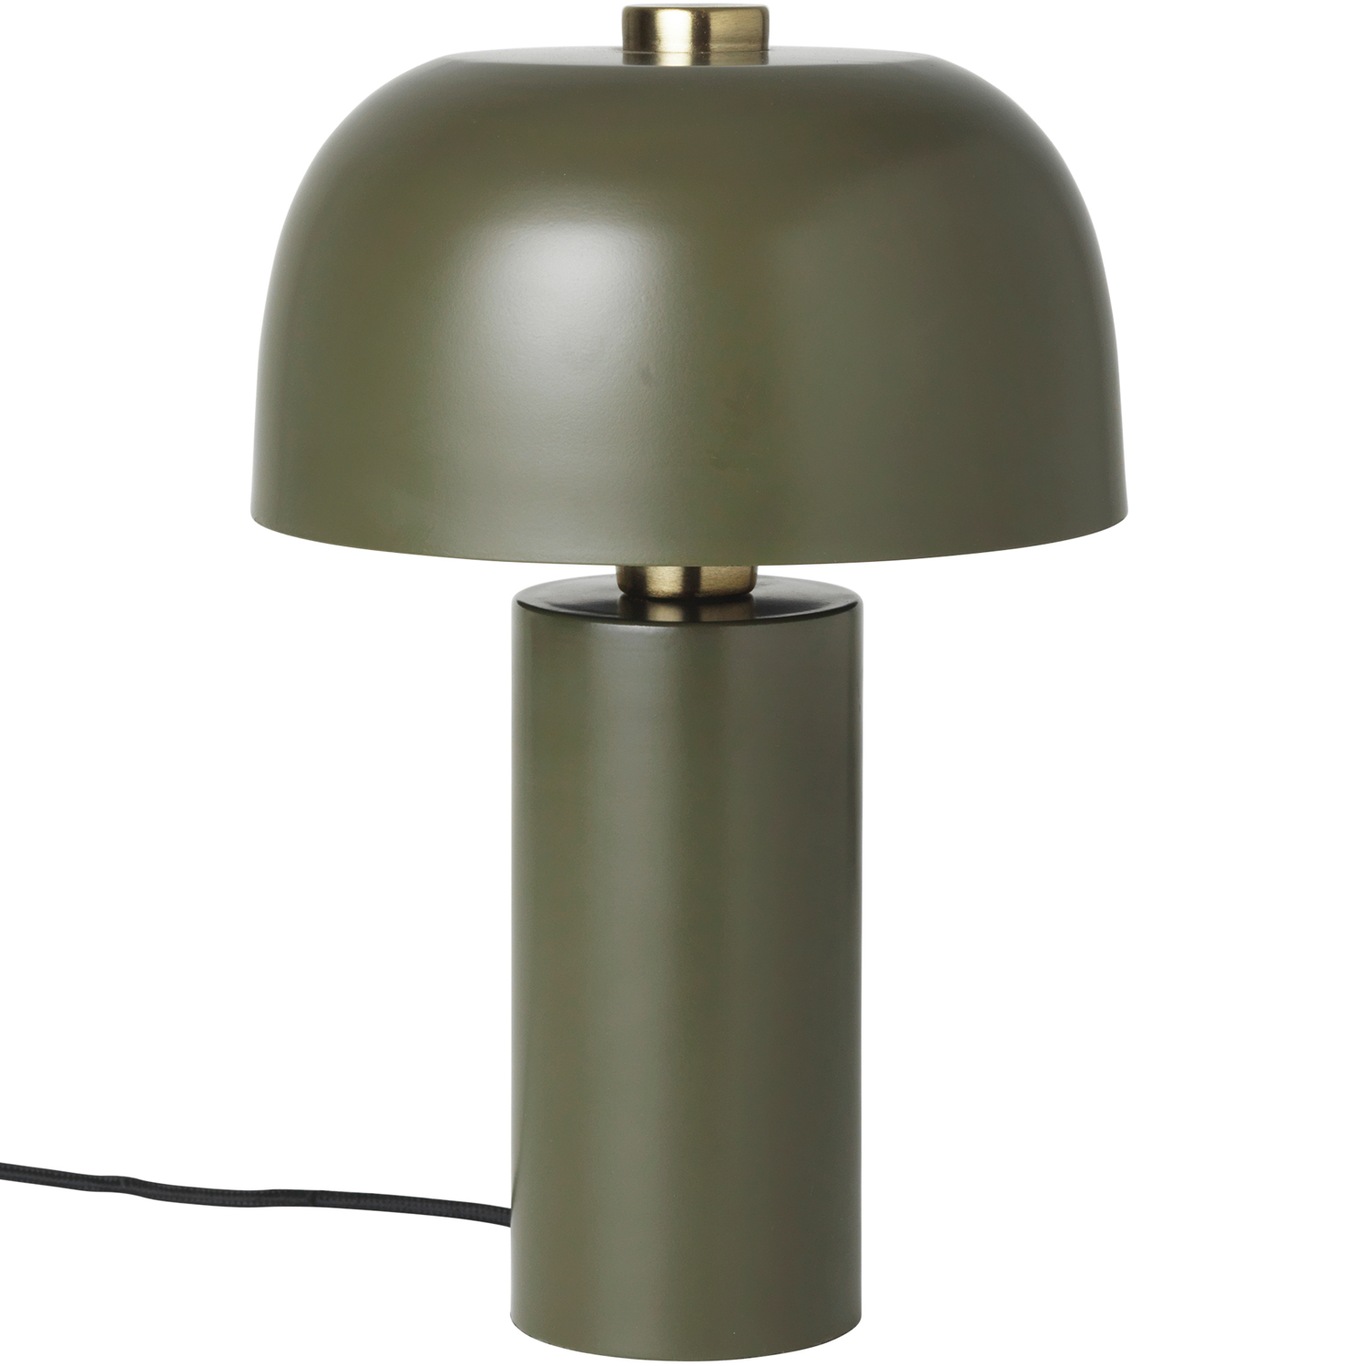 Lulu Classic Tischlampe, Army